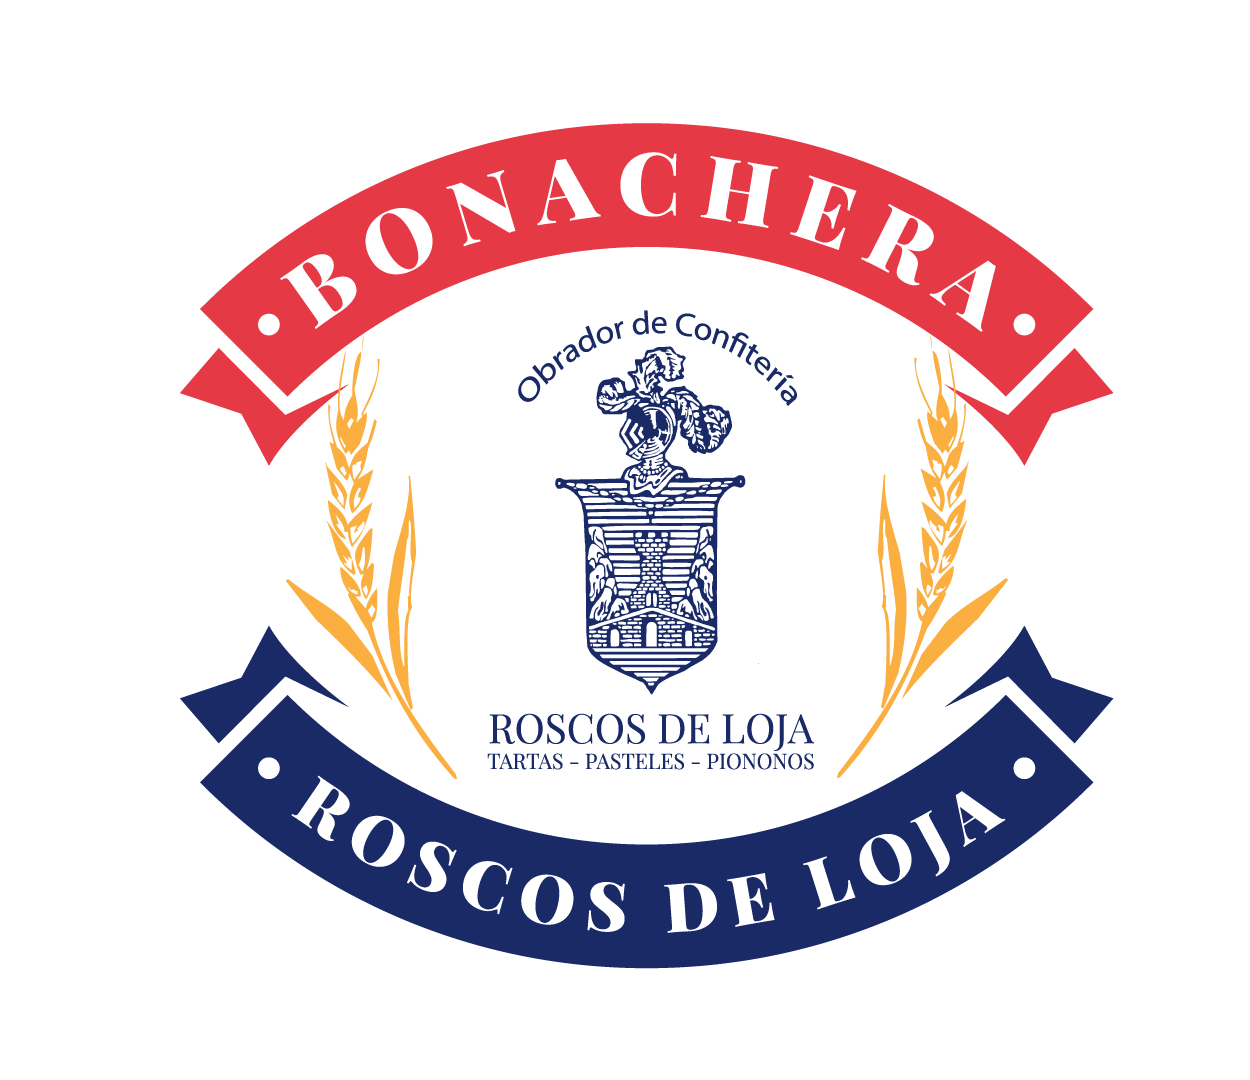 Roscos de Loja | Confitería Bonachera